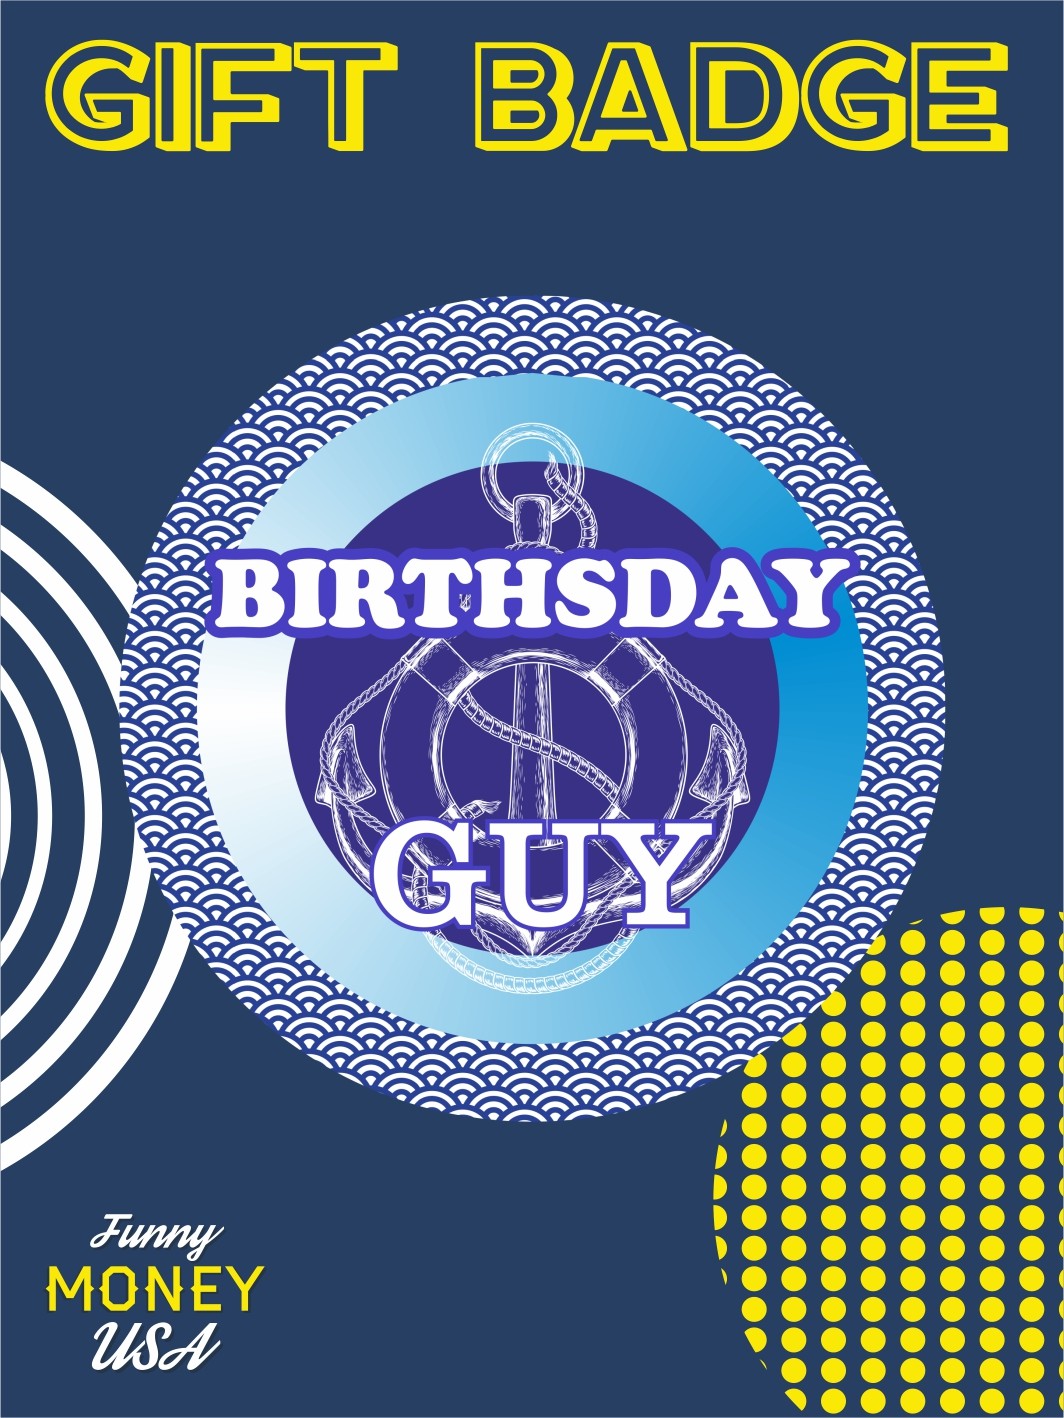 Gift badges "Birthday guy"